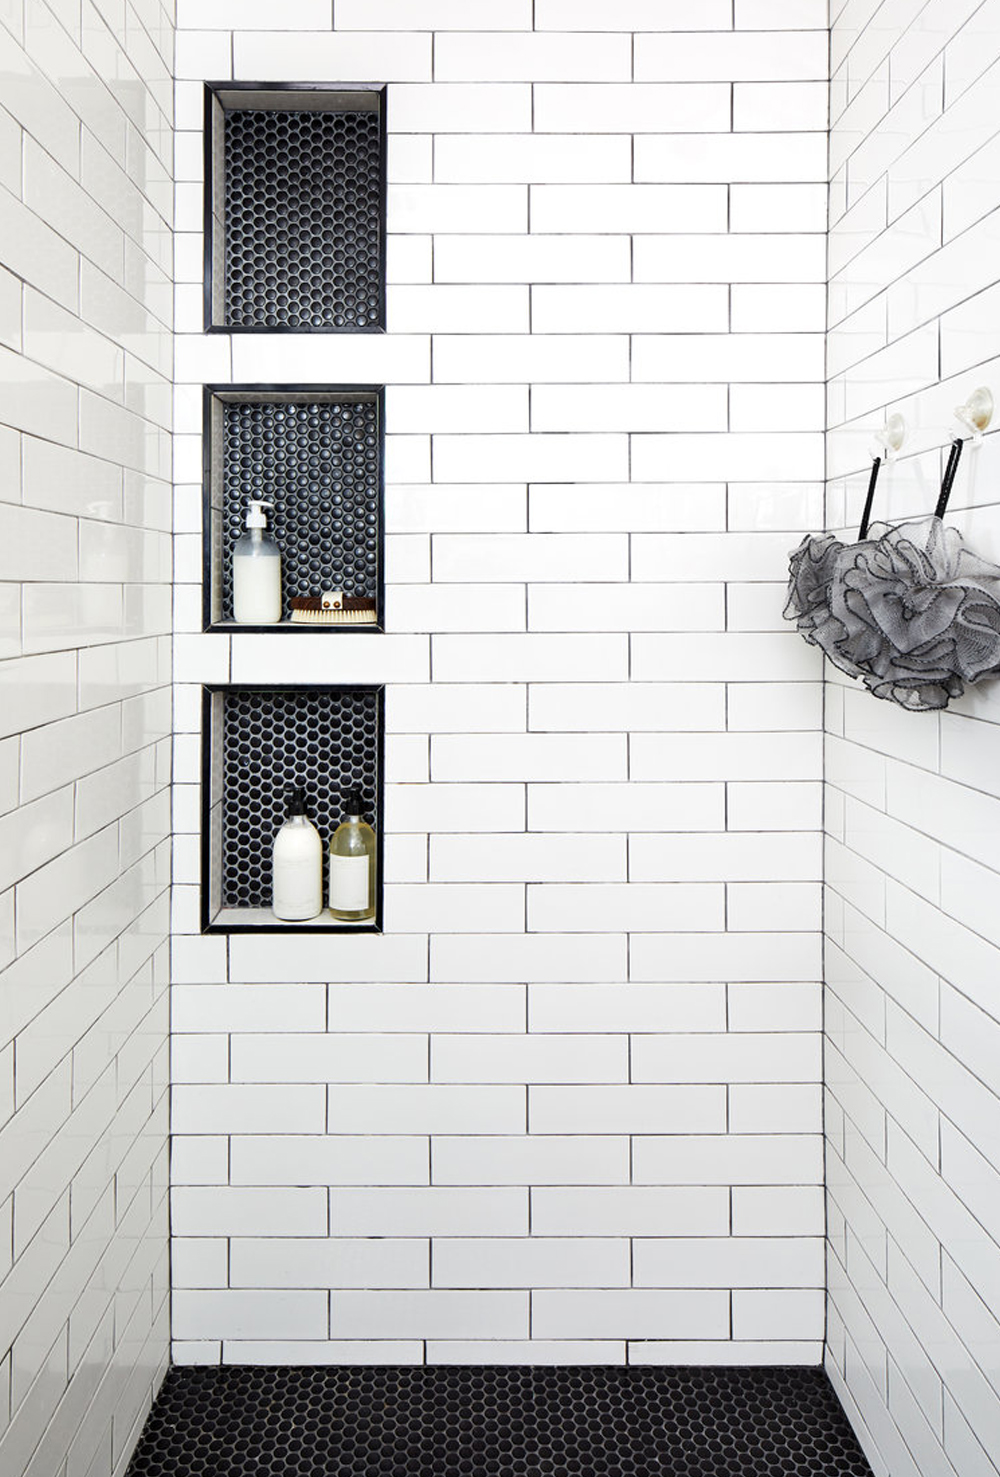 Inspiration for our Guest Bathroom from interior design firm, Zoe Feldman Design.